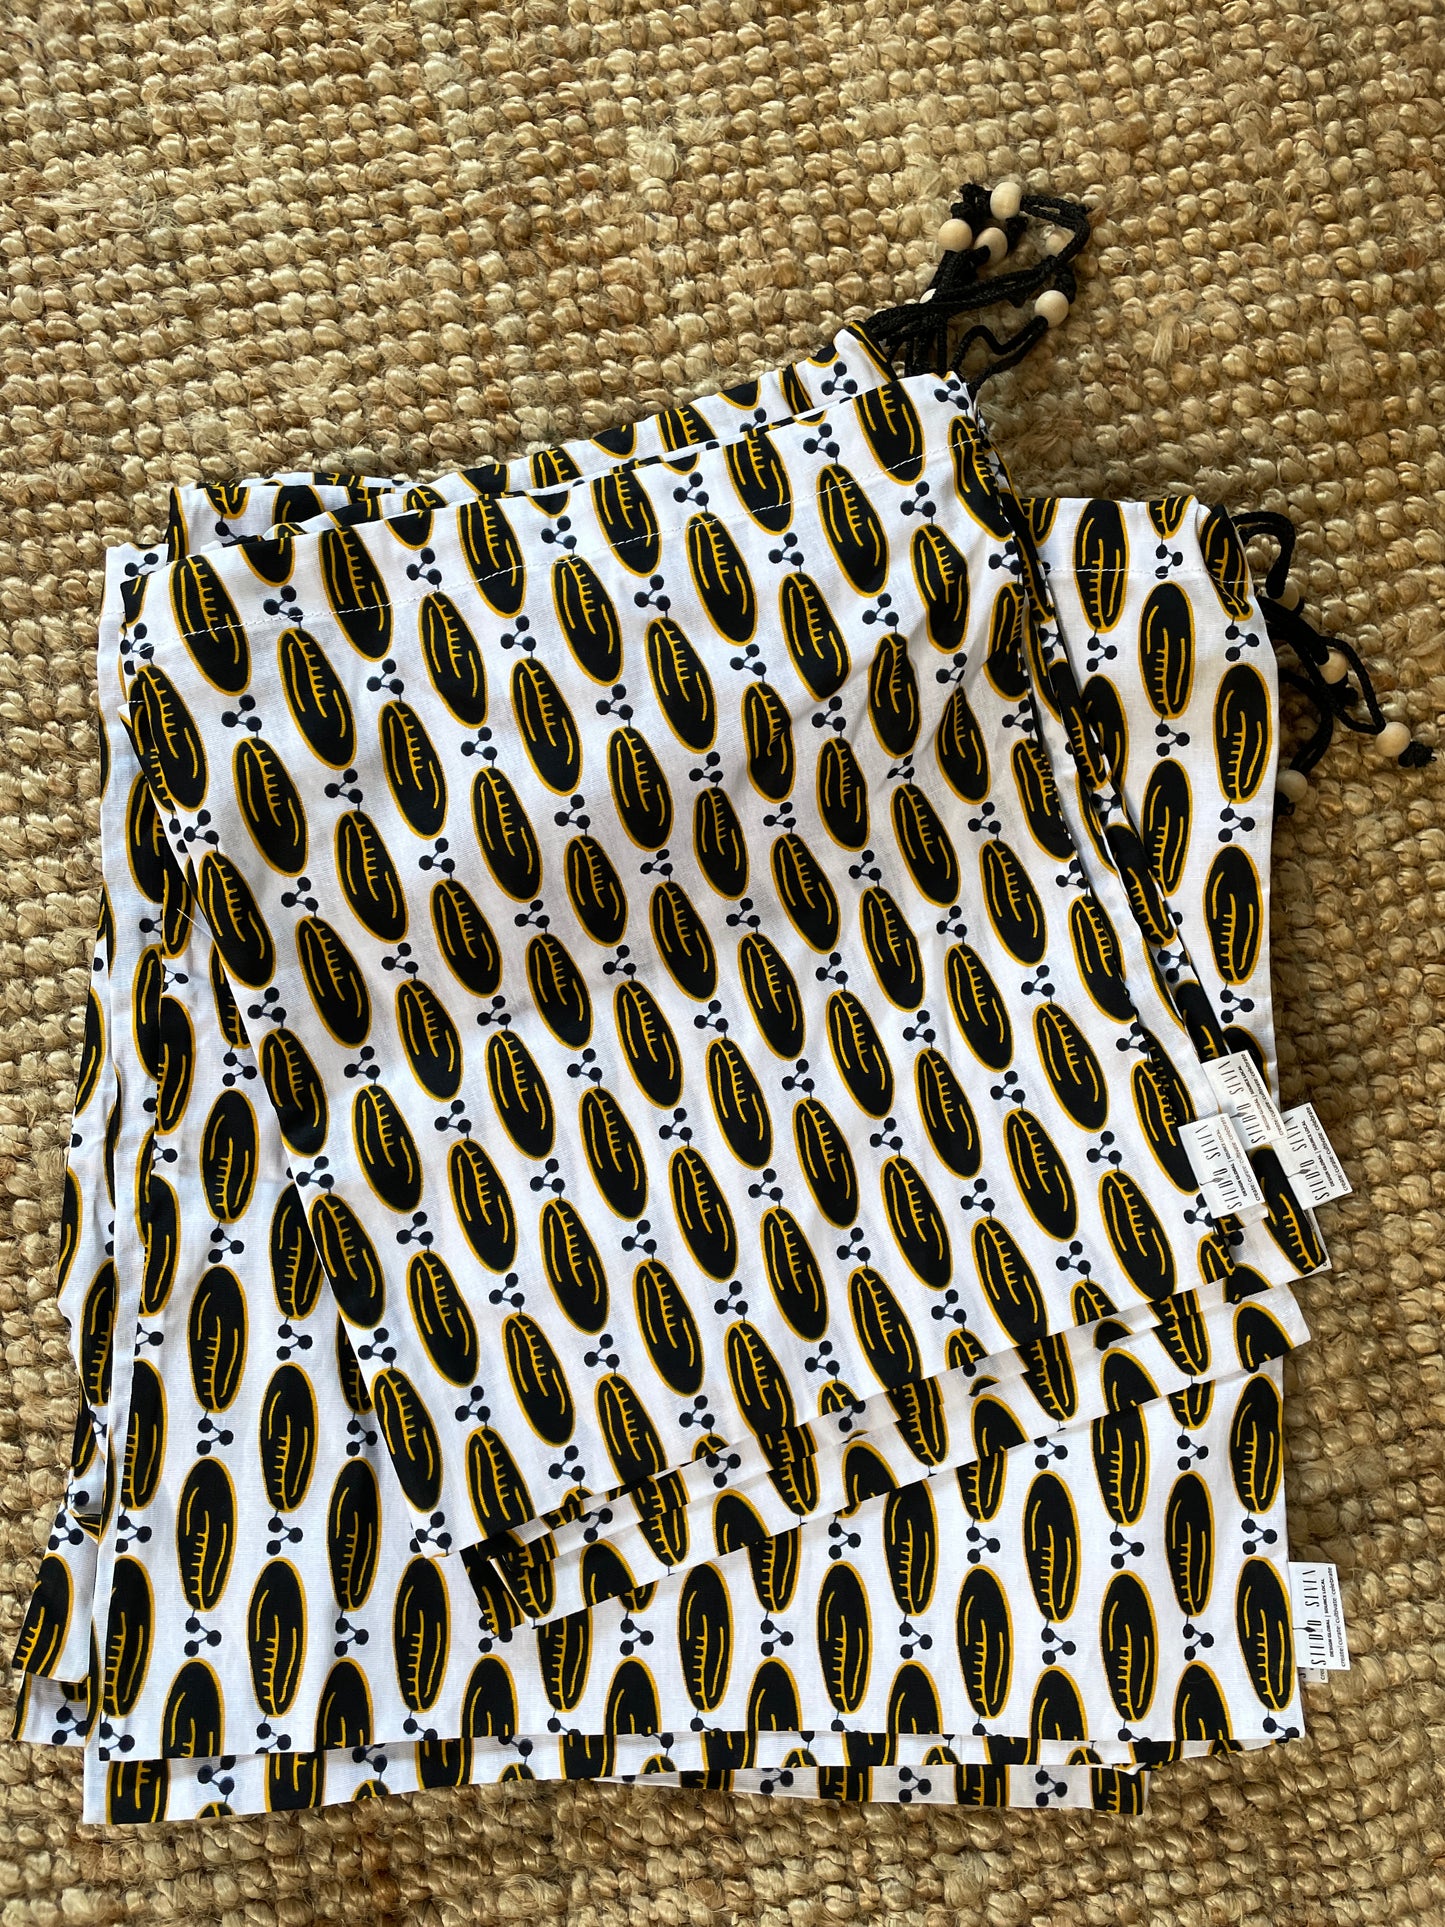 African kitenge fabric - drawstring tote (large - coffee bean print)